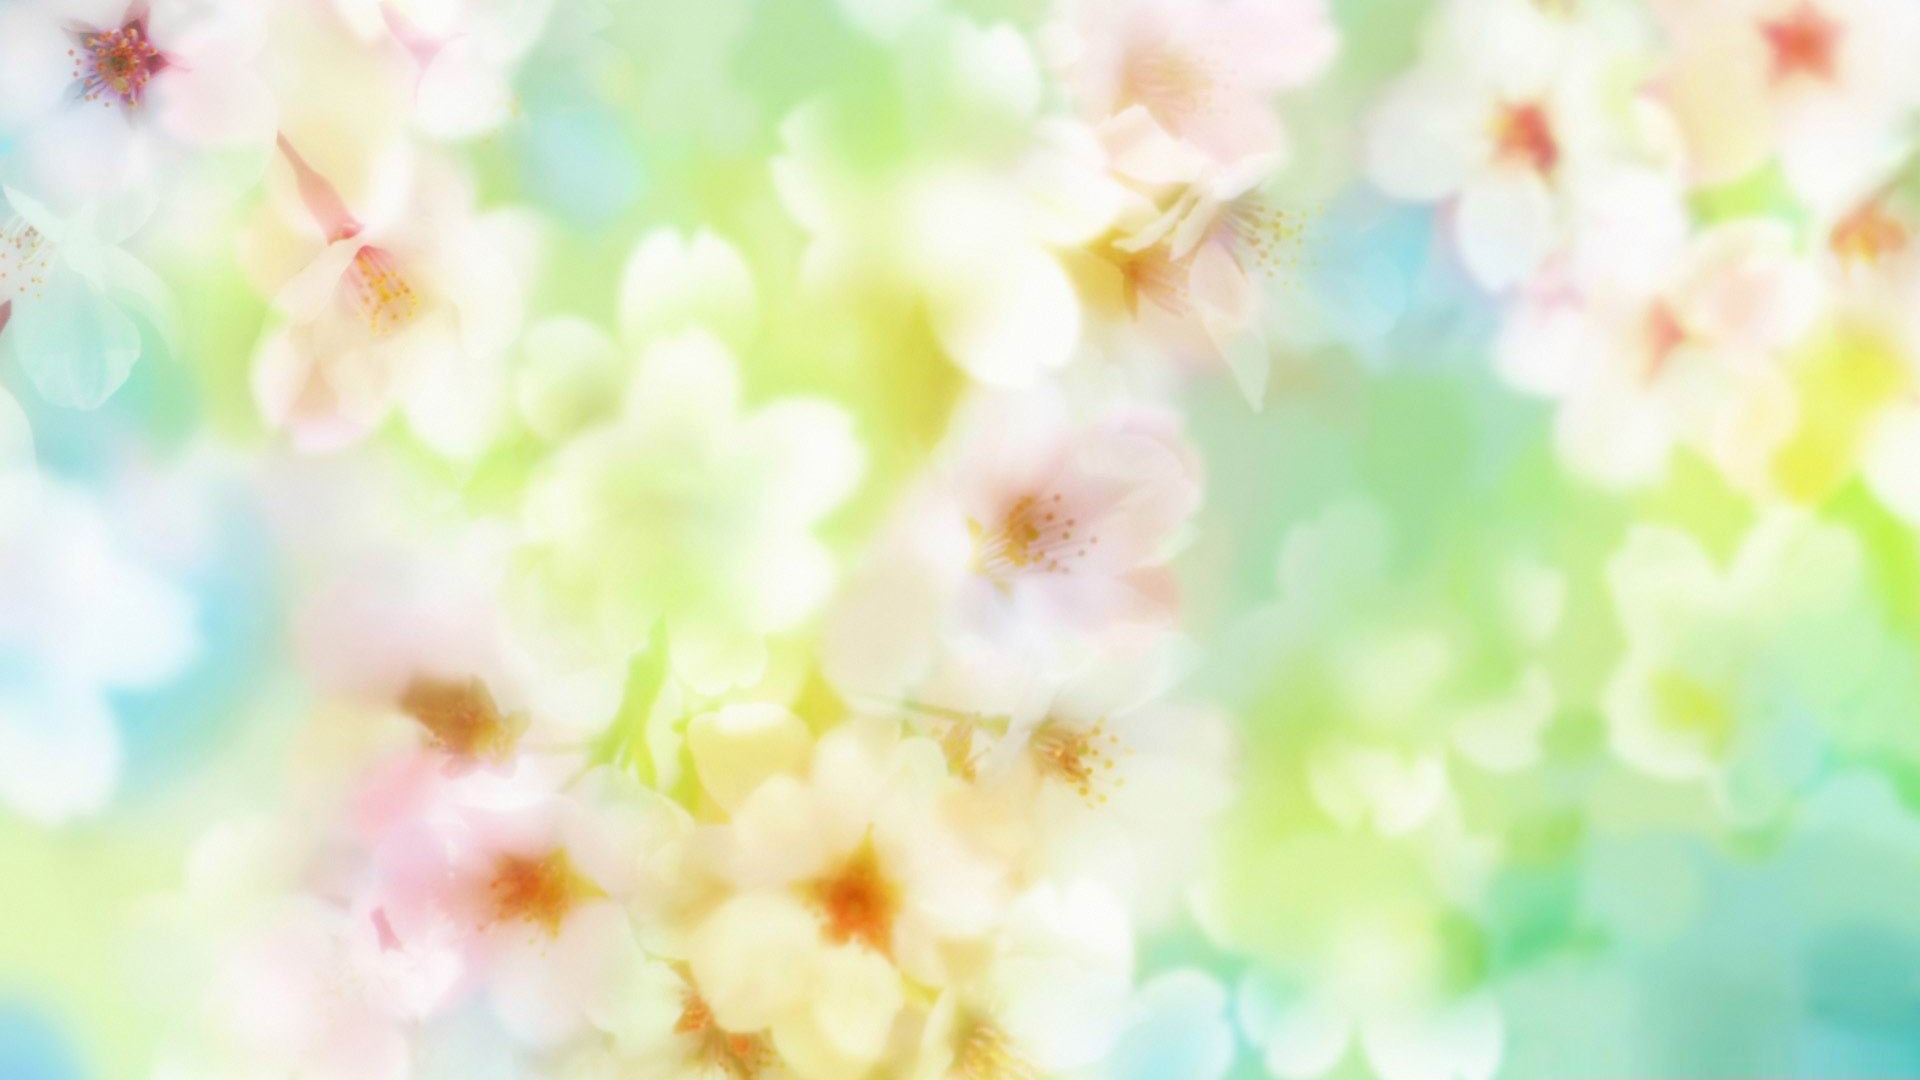  flowers spring theme Desktop wallpaper   1920x1080 wallpaper download